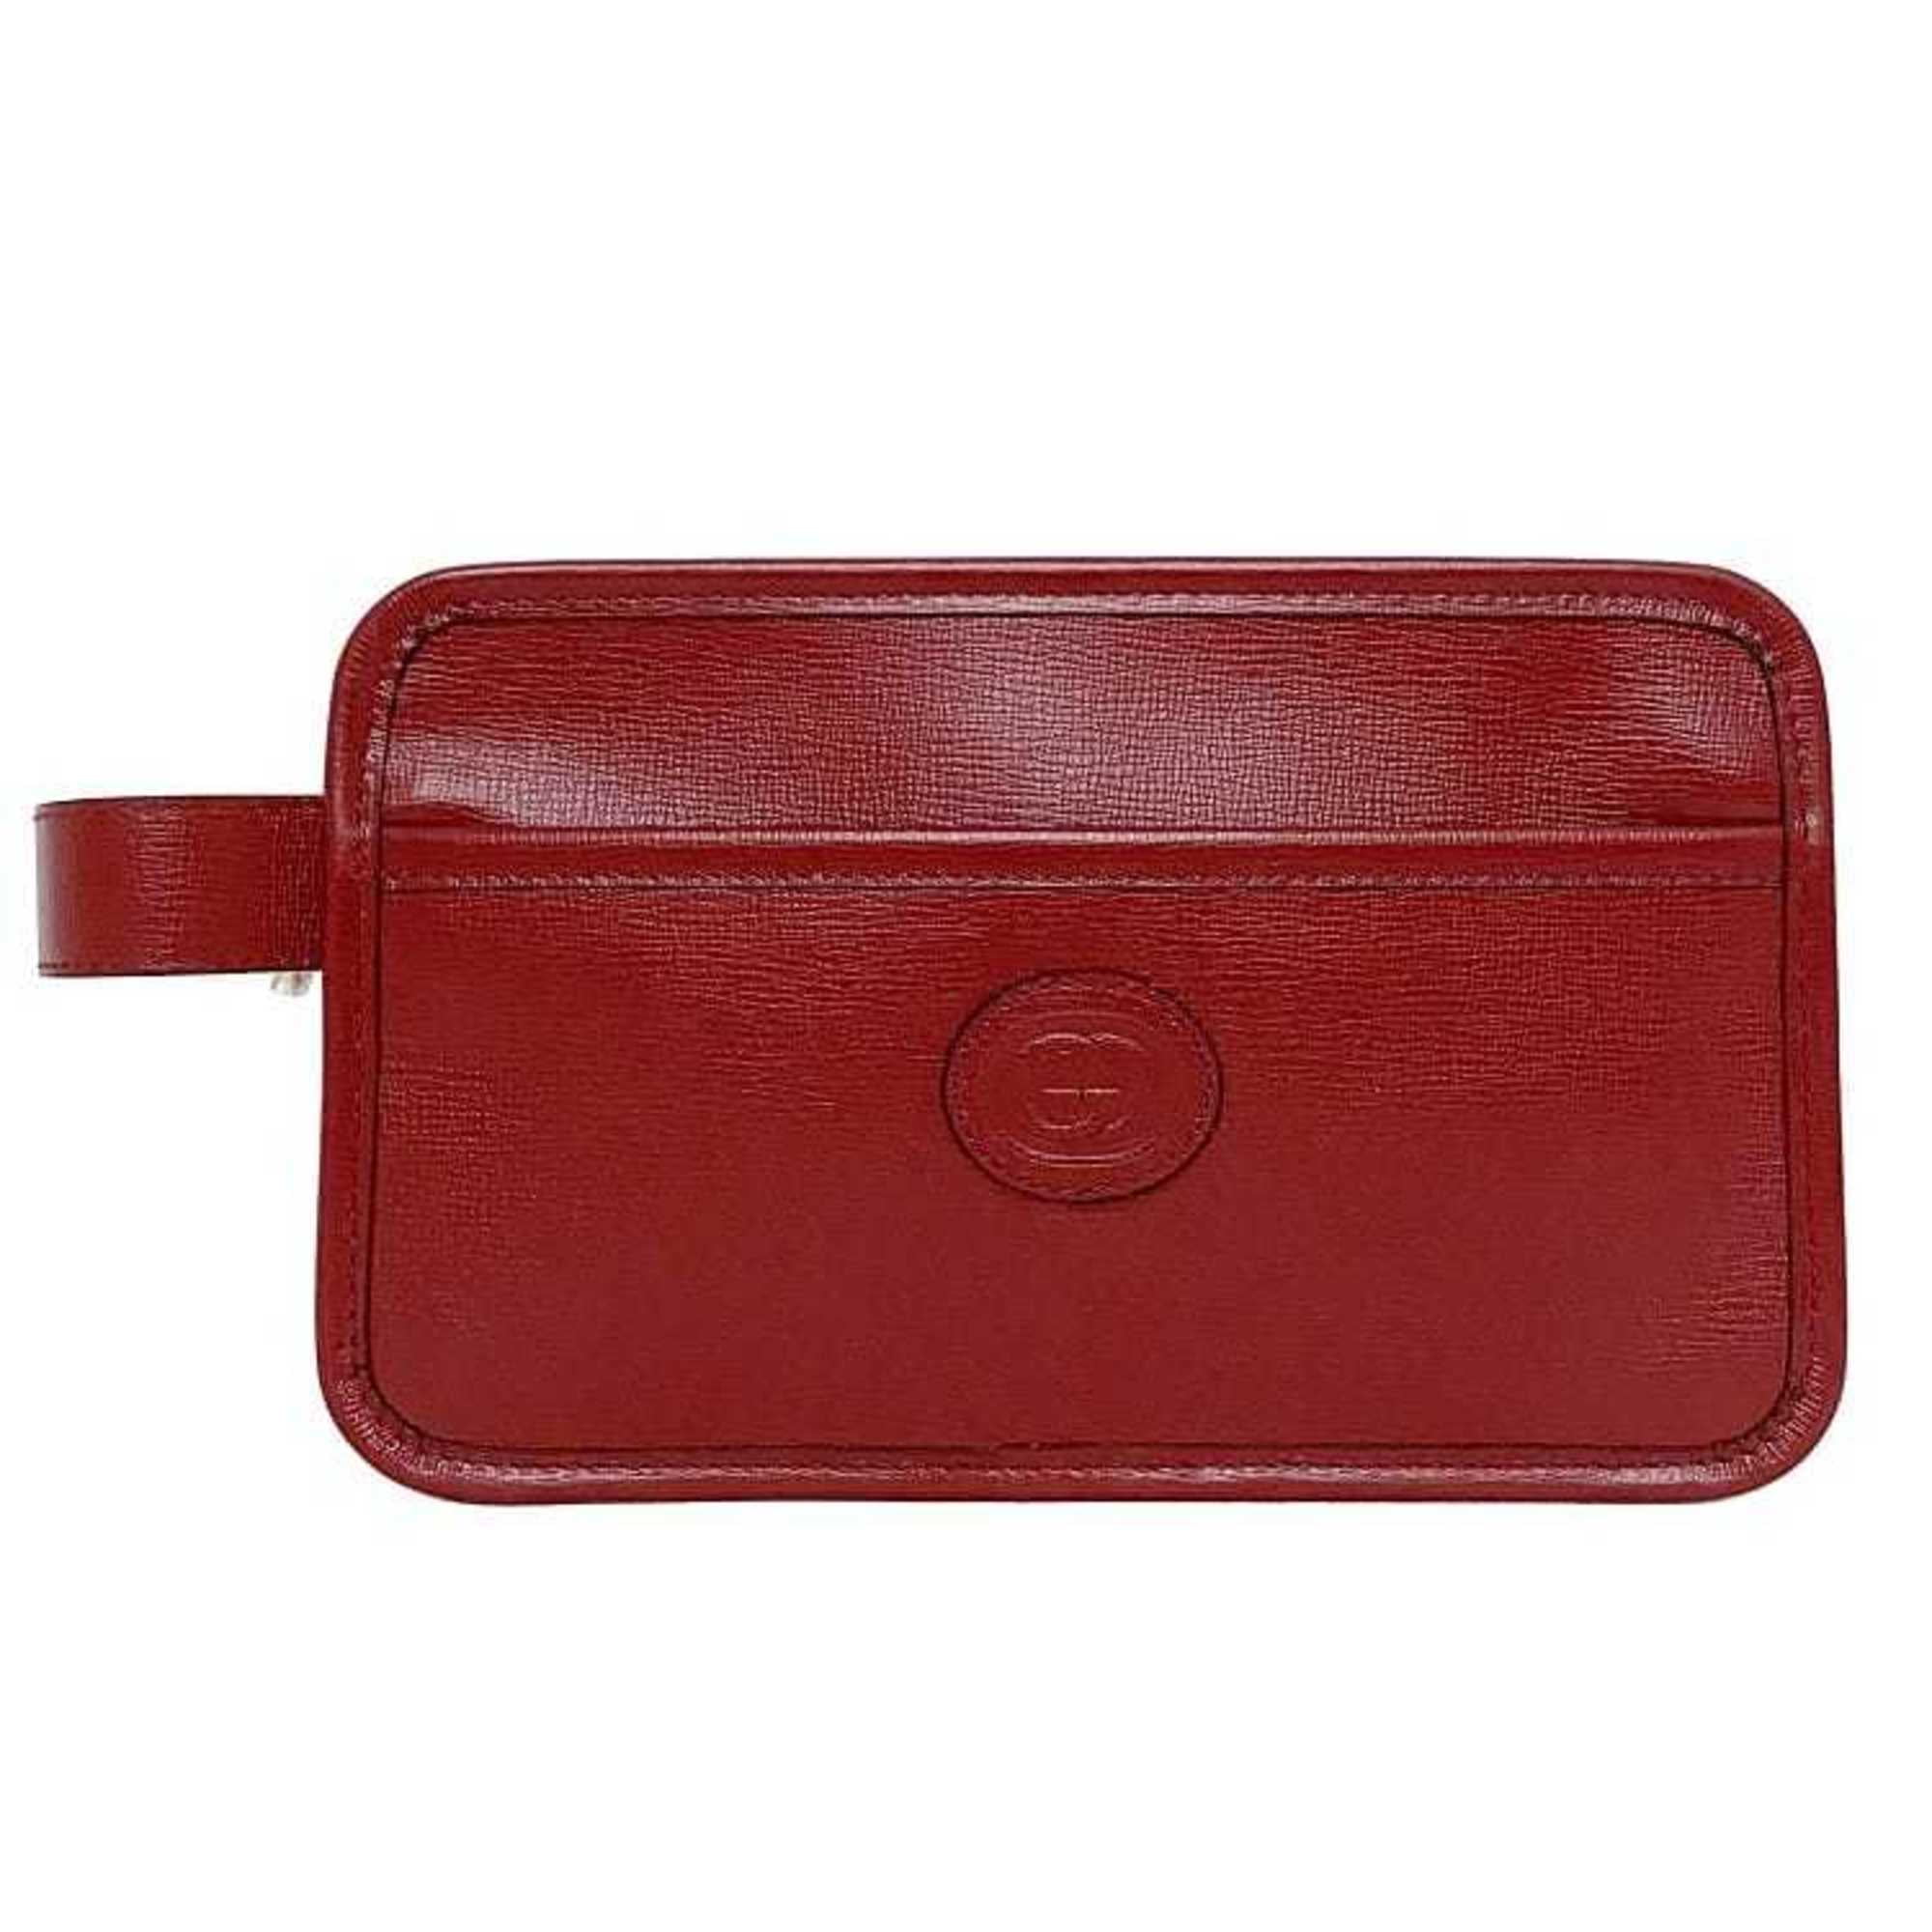 Sleek & Sharp Gucci Brown Leather Medium Top Handle Hand Bag Rich Maple  Color | eBay